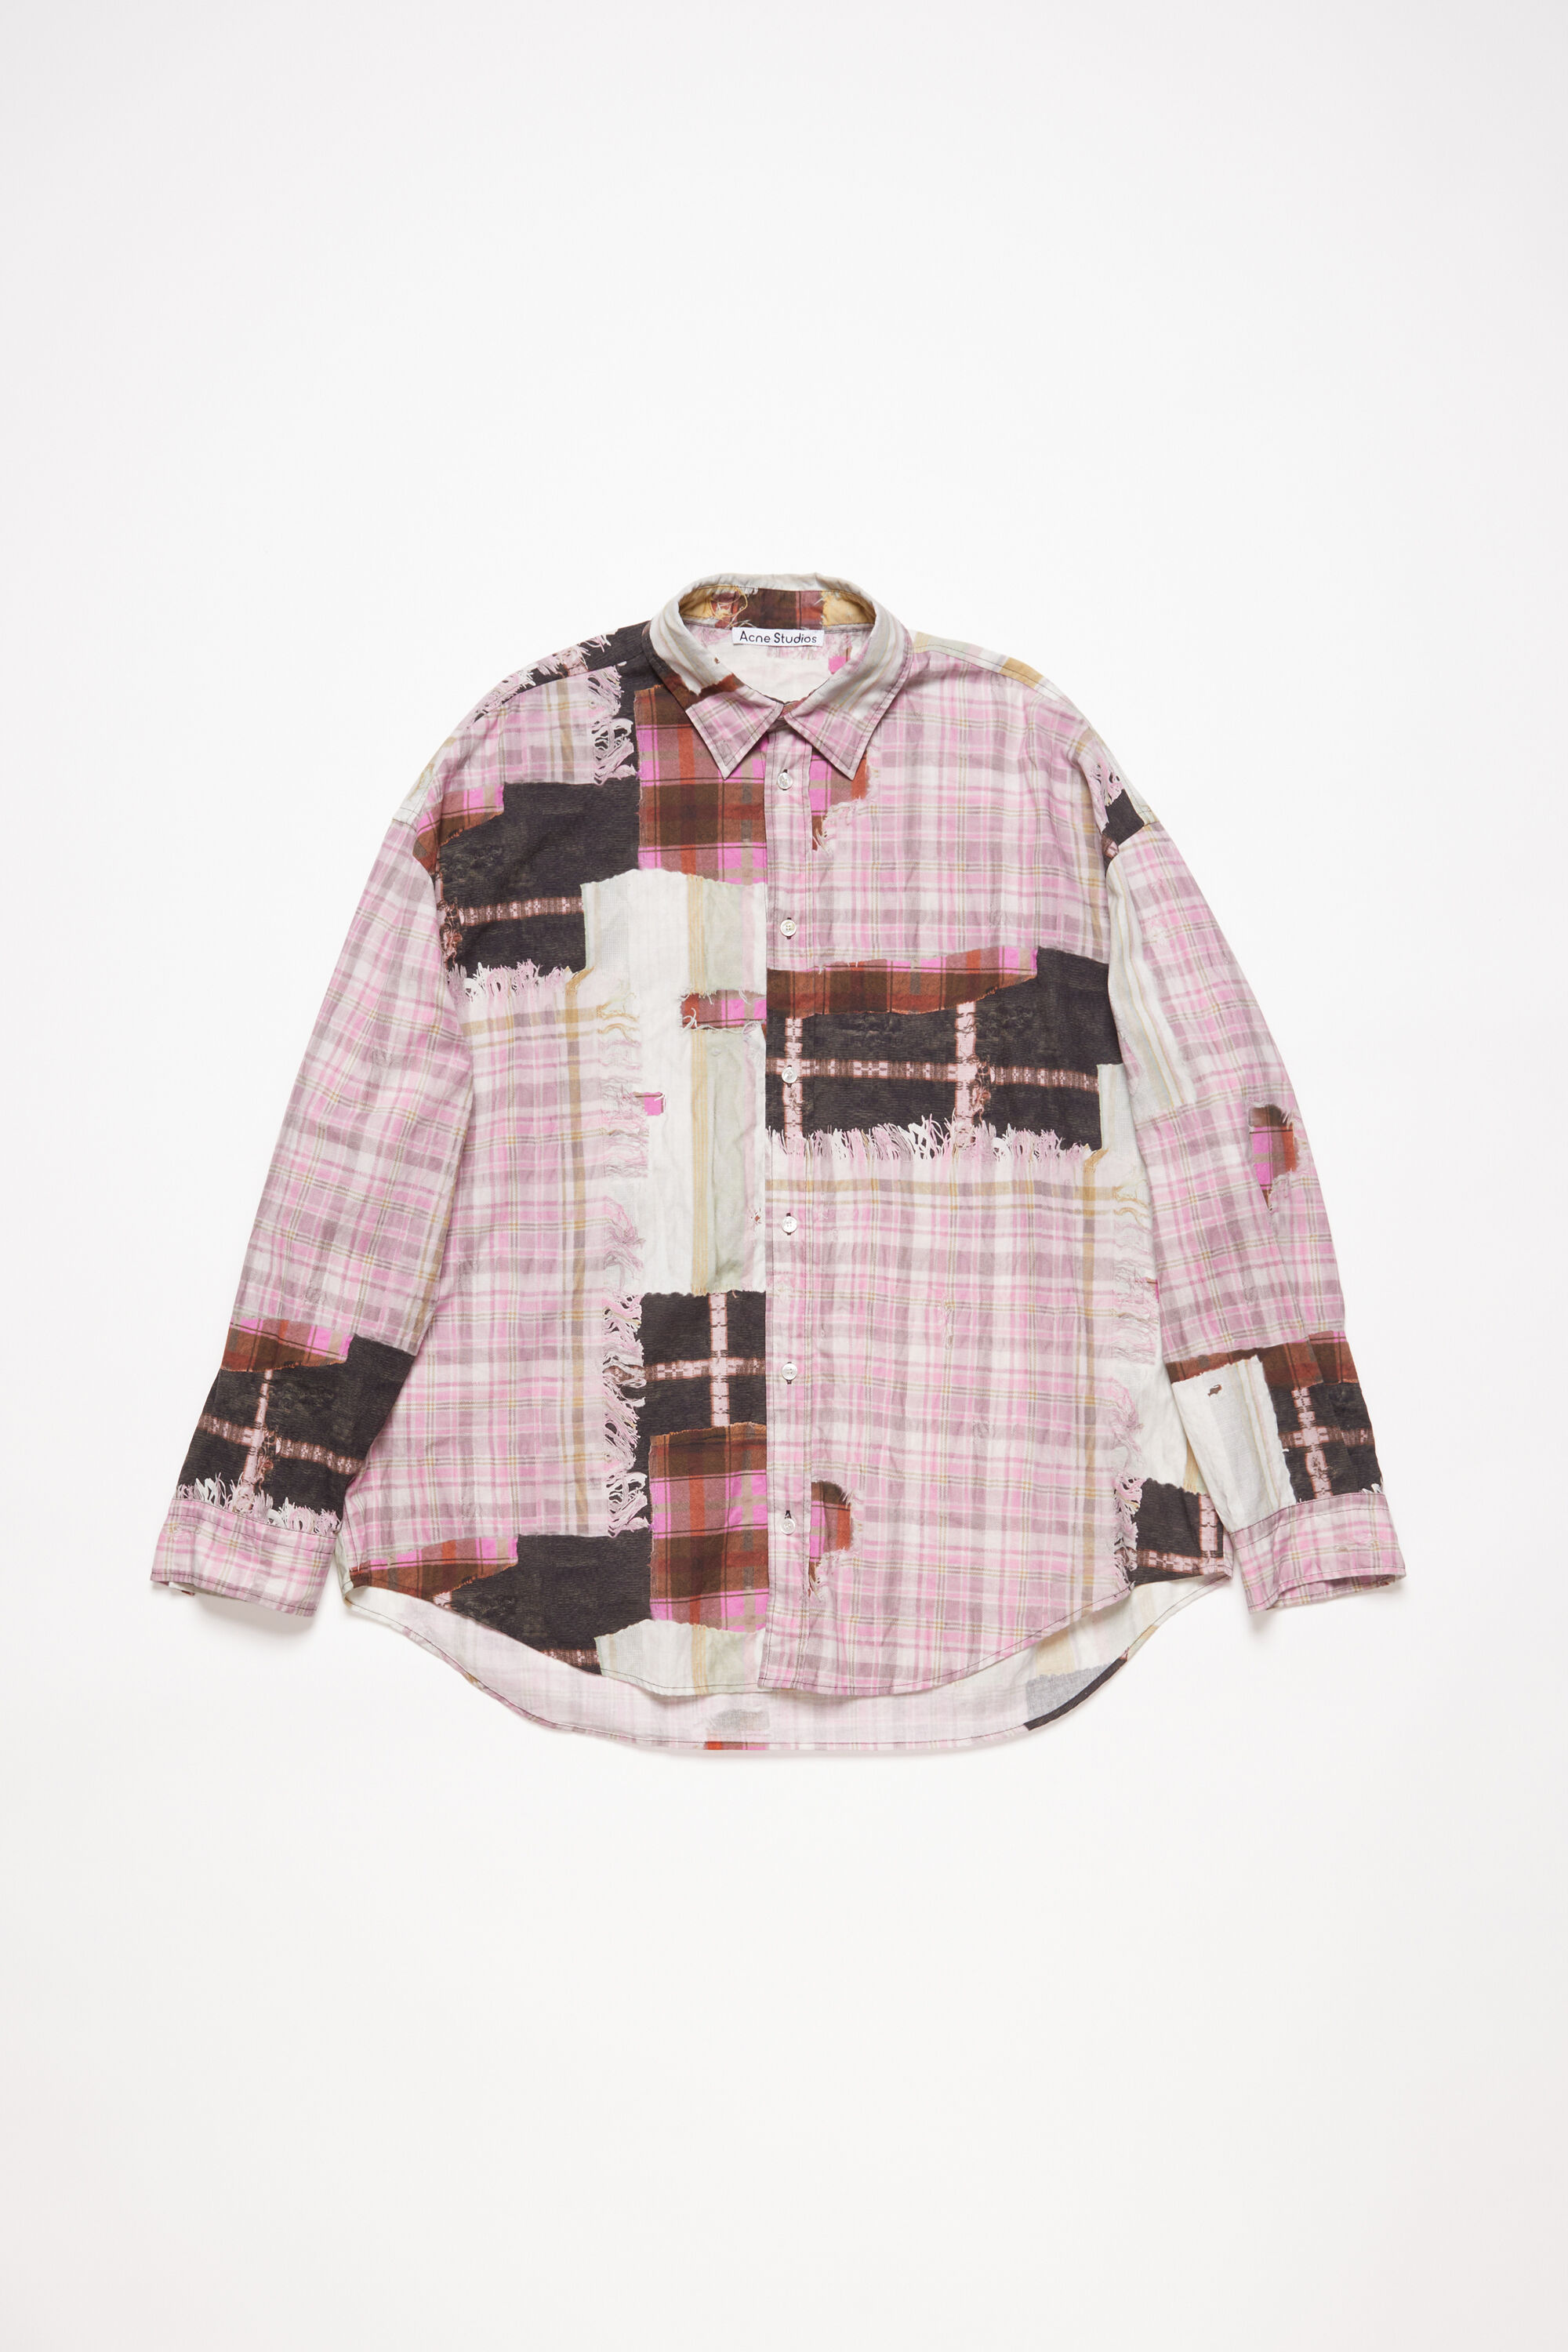 Acne Studios - Print button-up shirt - Pink multicolor